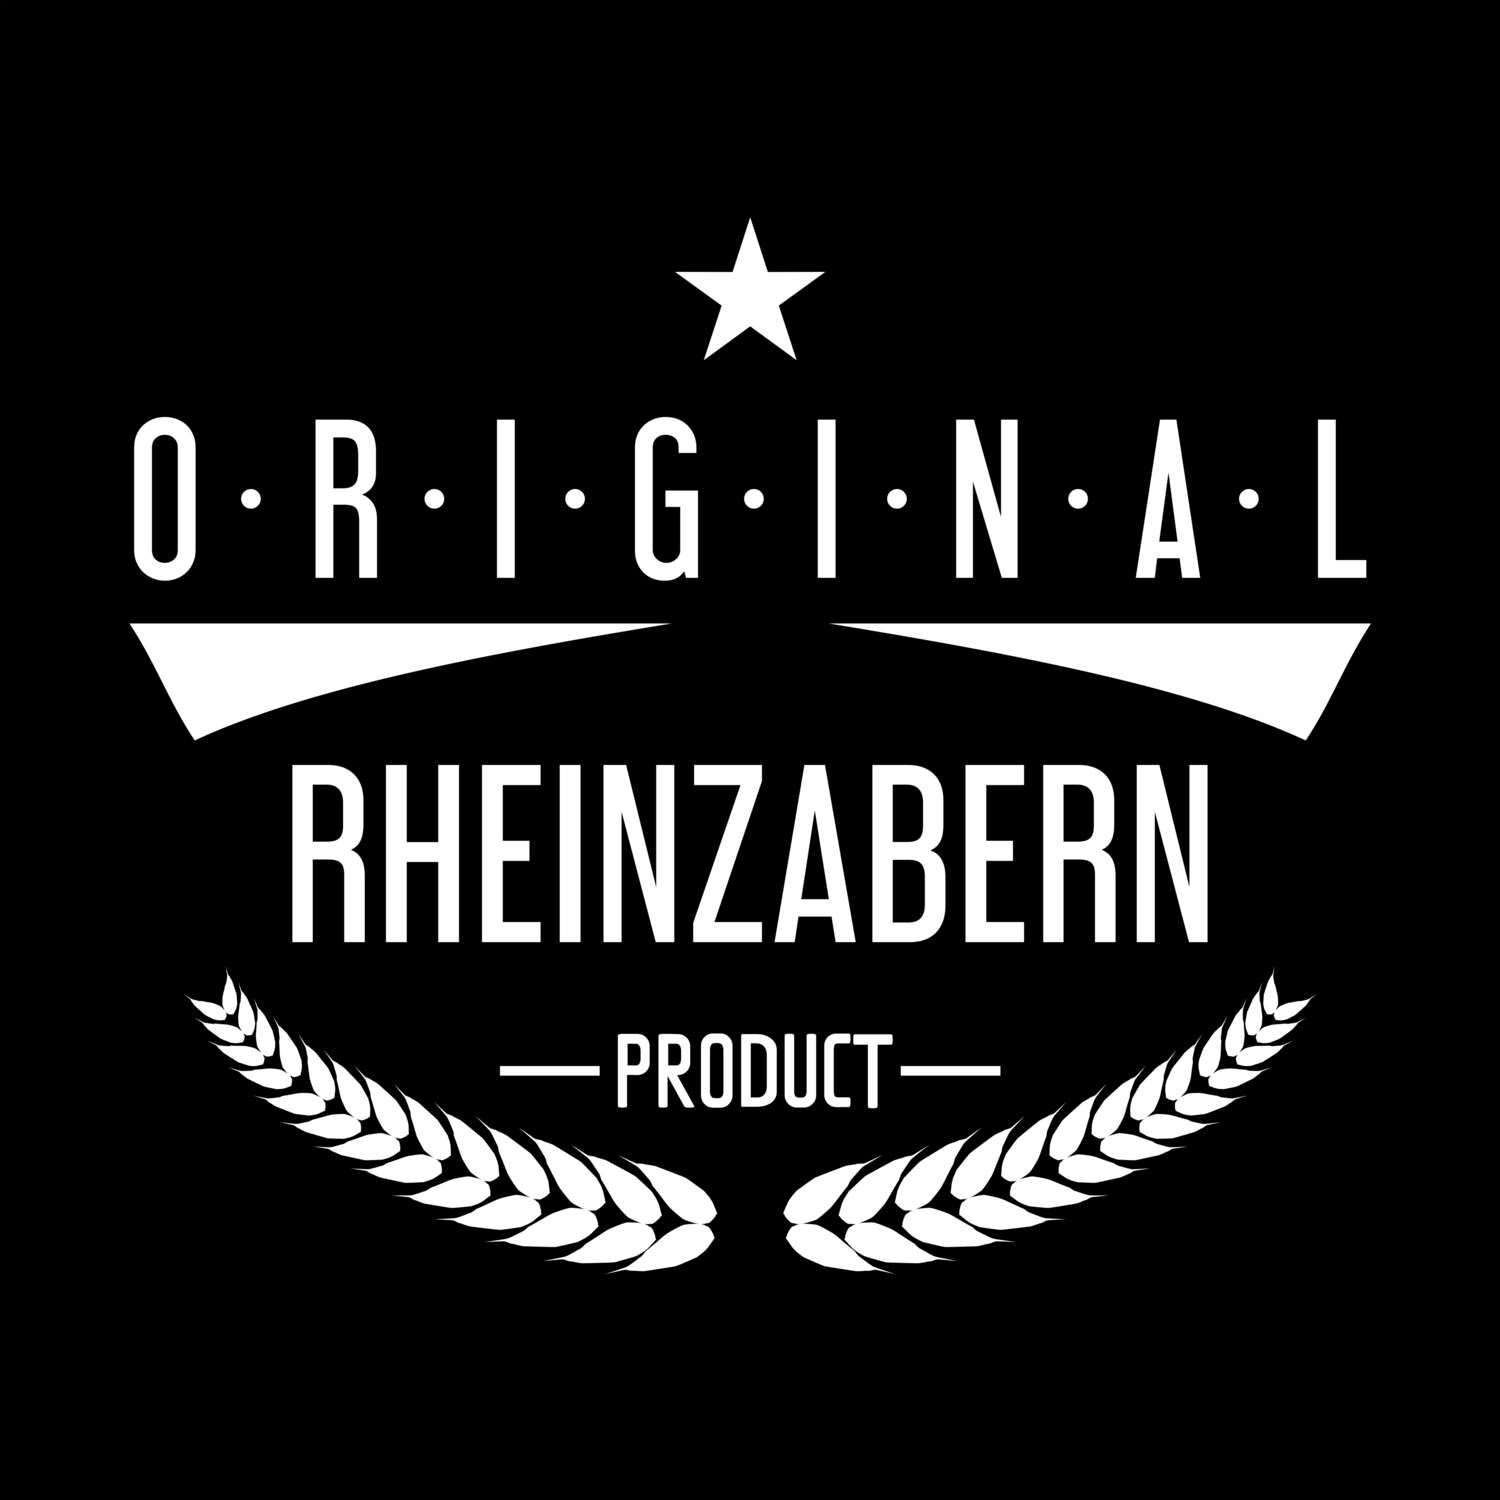 Rheinzabern T-Shirt »Original Product«